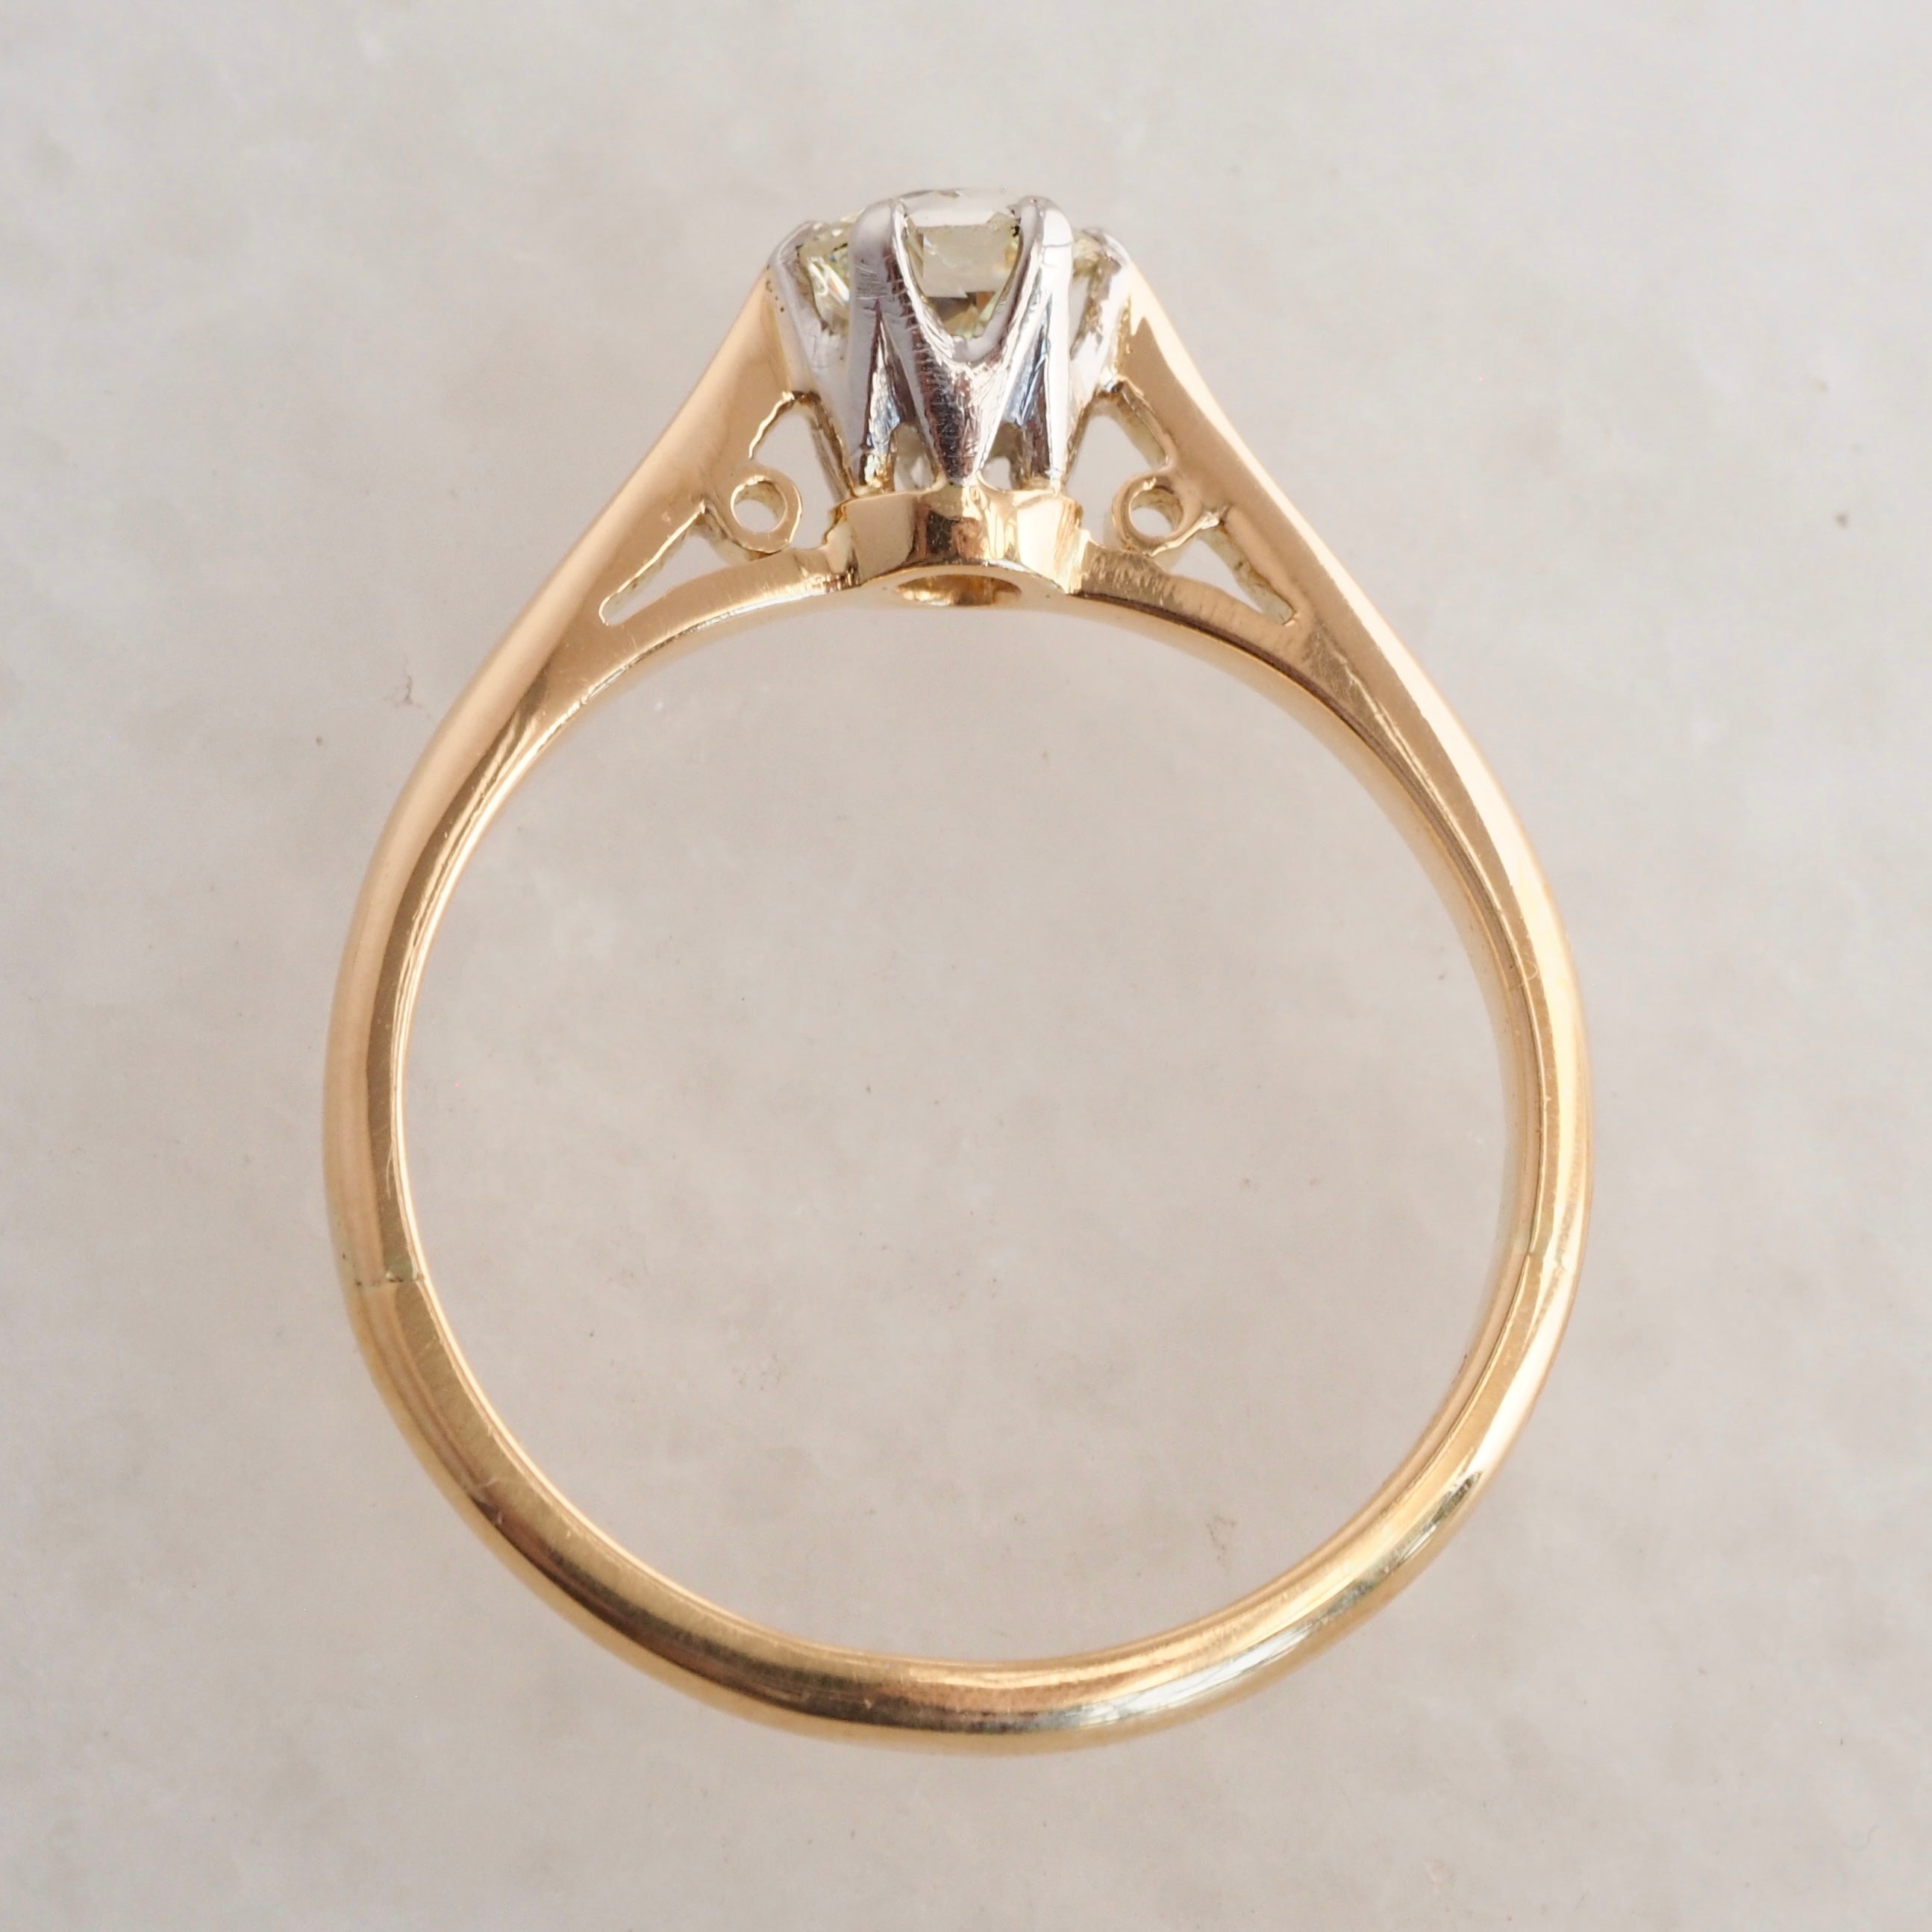 Antique Art Deco English 18k Gold Old Mine Cut Diamond Solitaire Ring